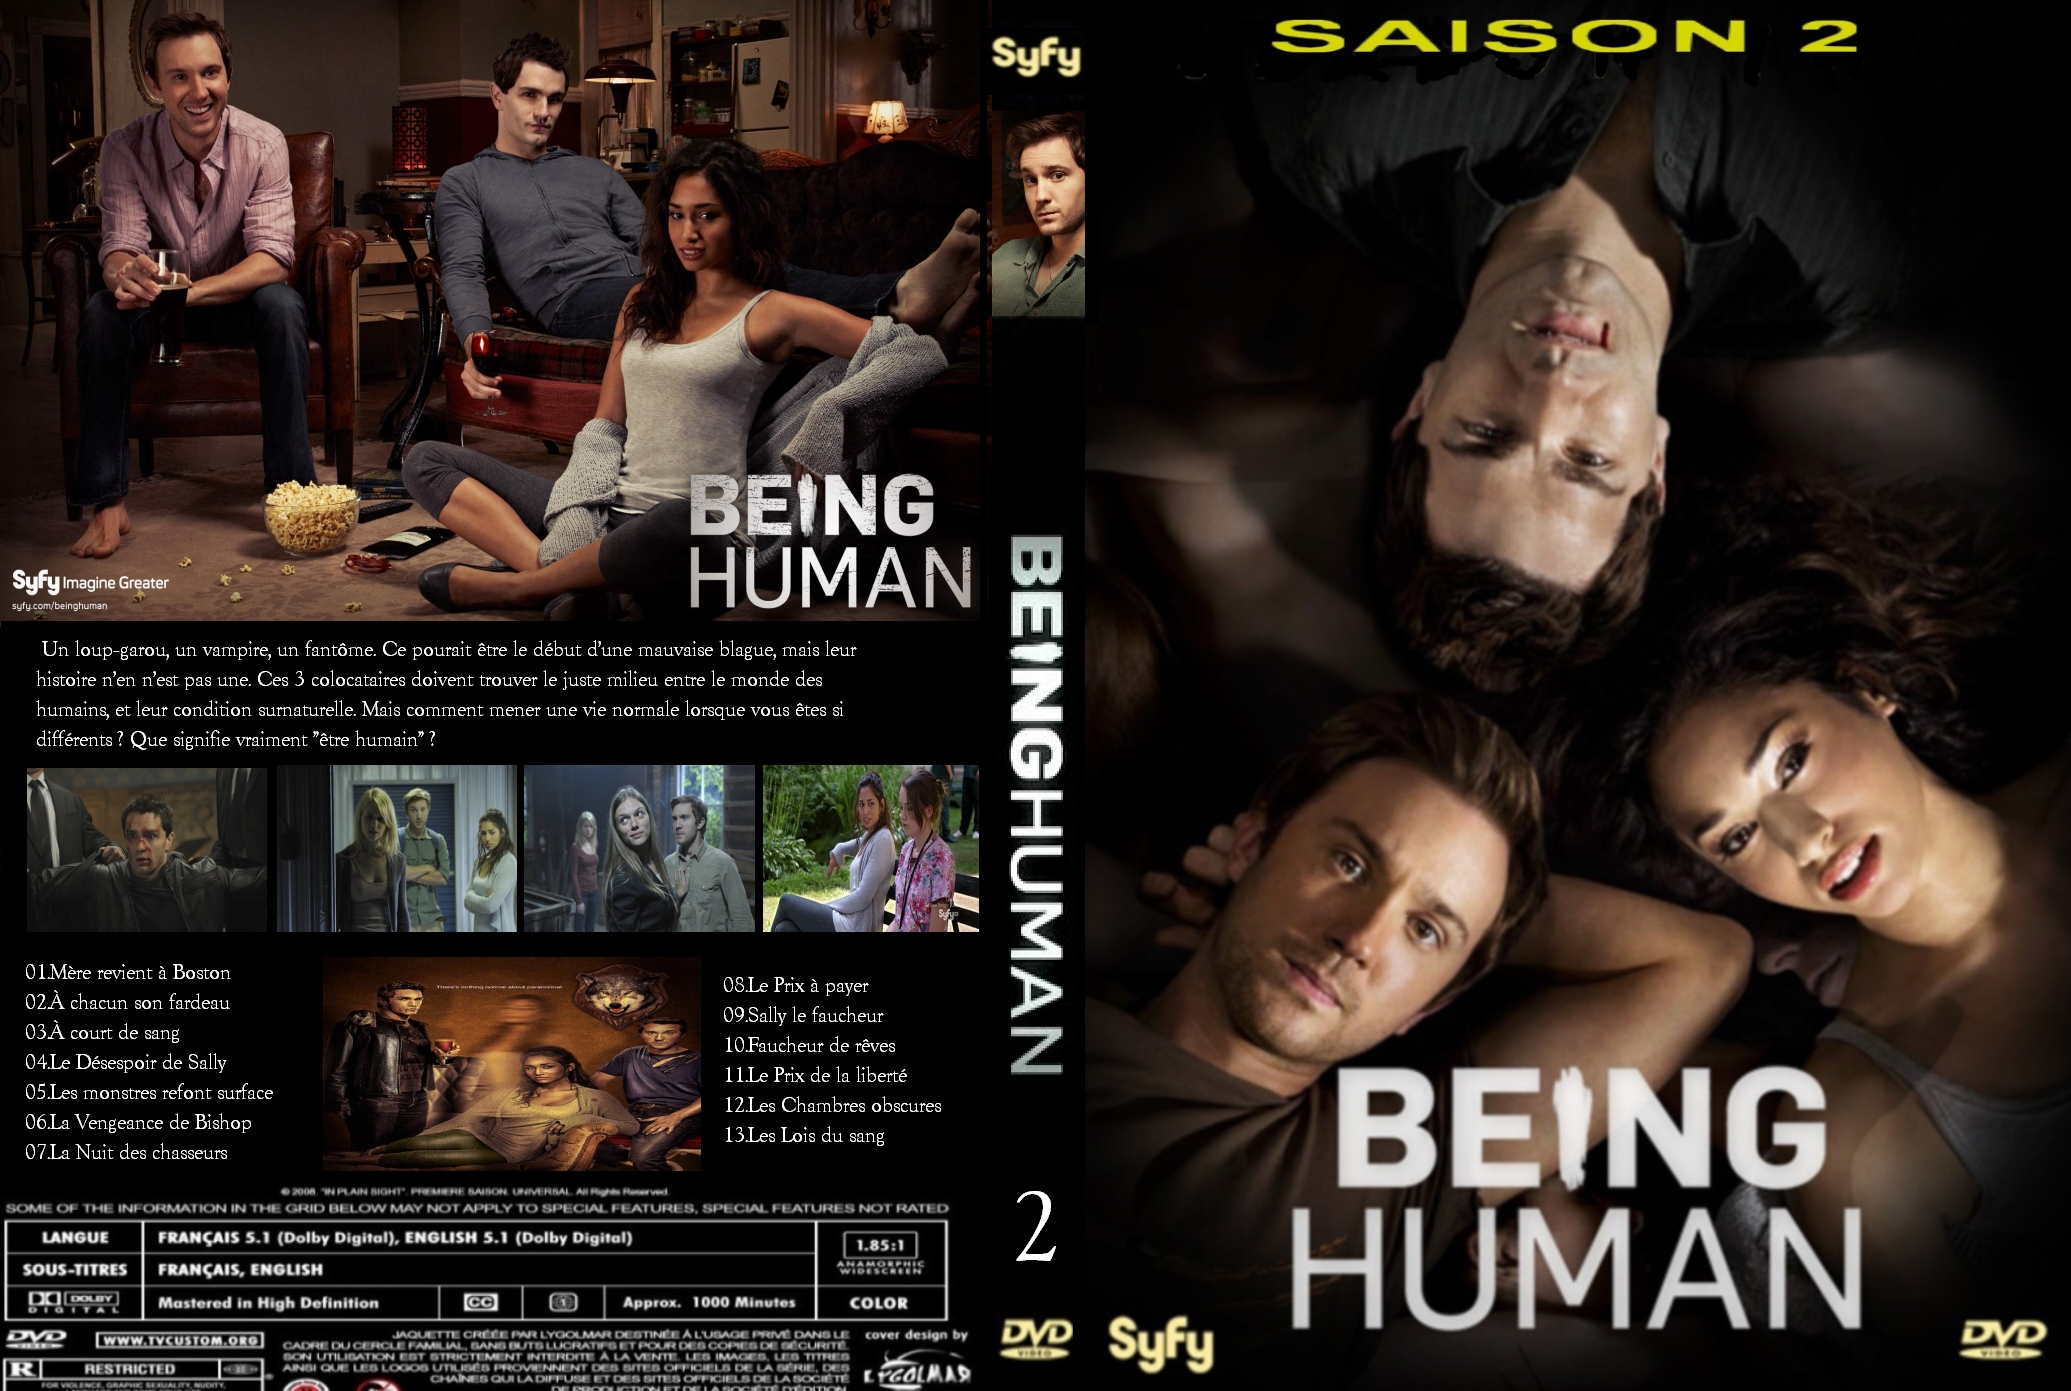 Jaquette DVD Being Human US Saison 2 custom